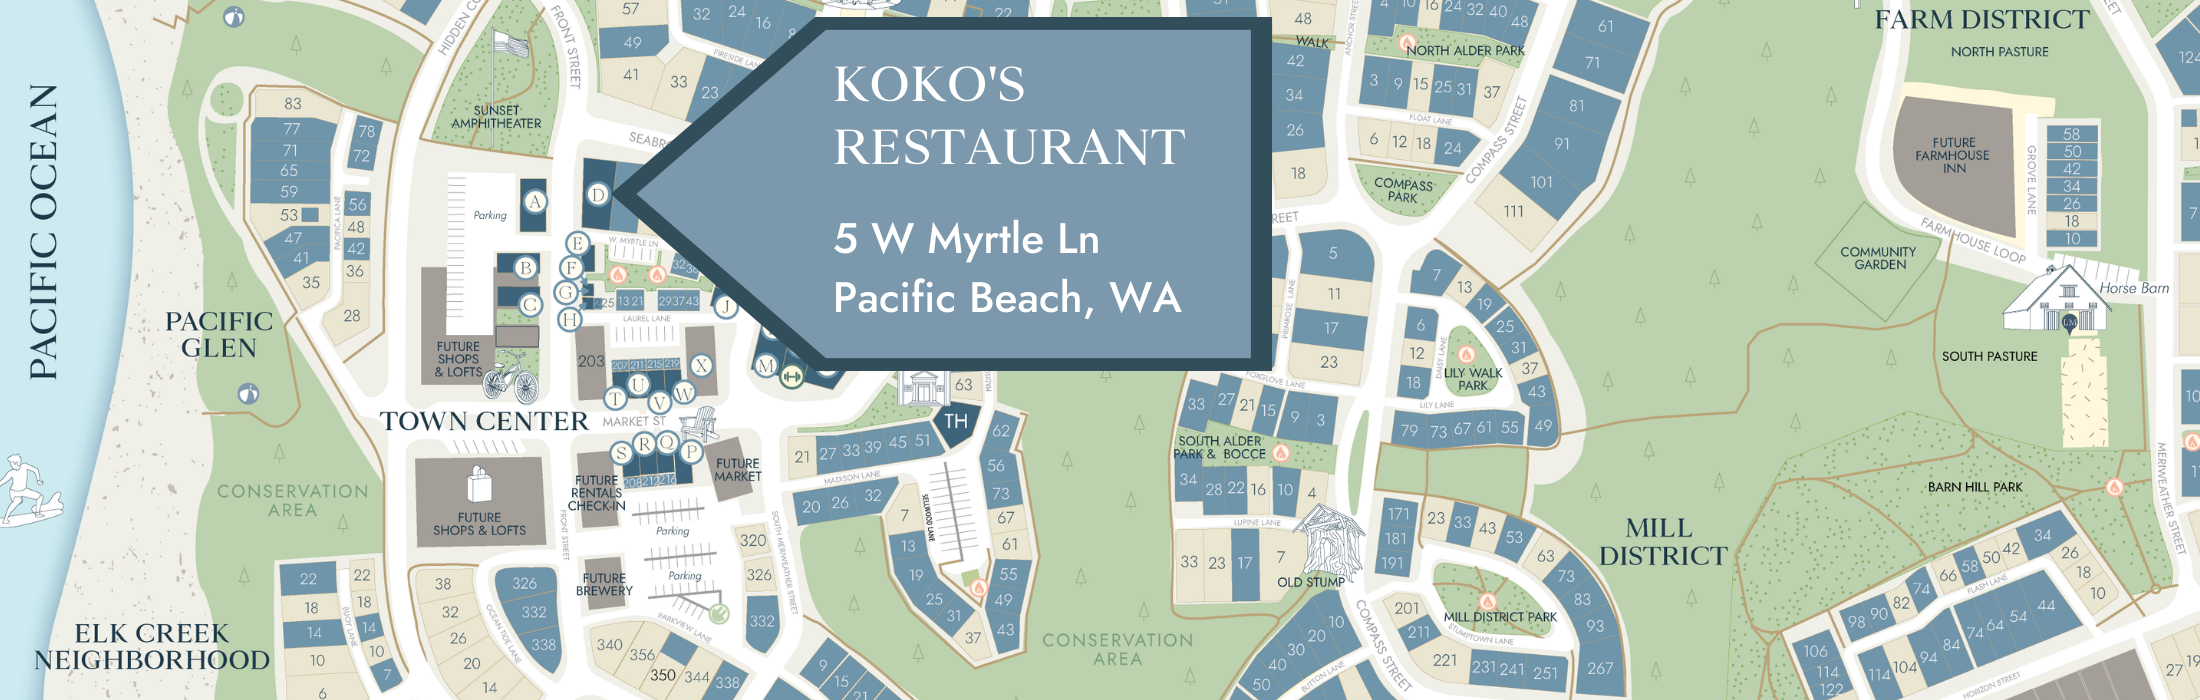 Koko's Location In Seabrook